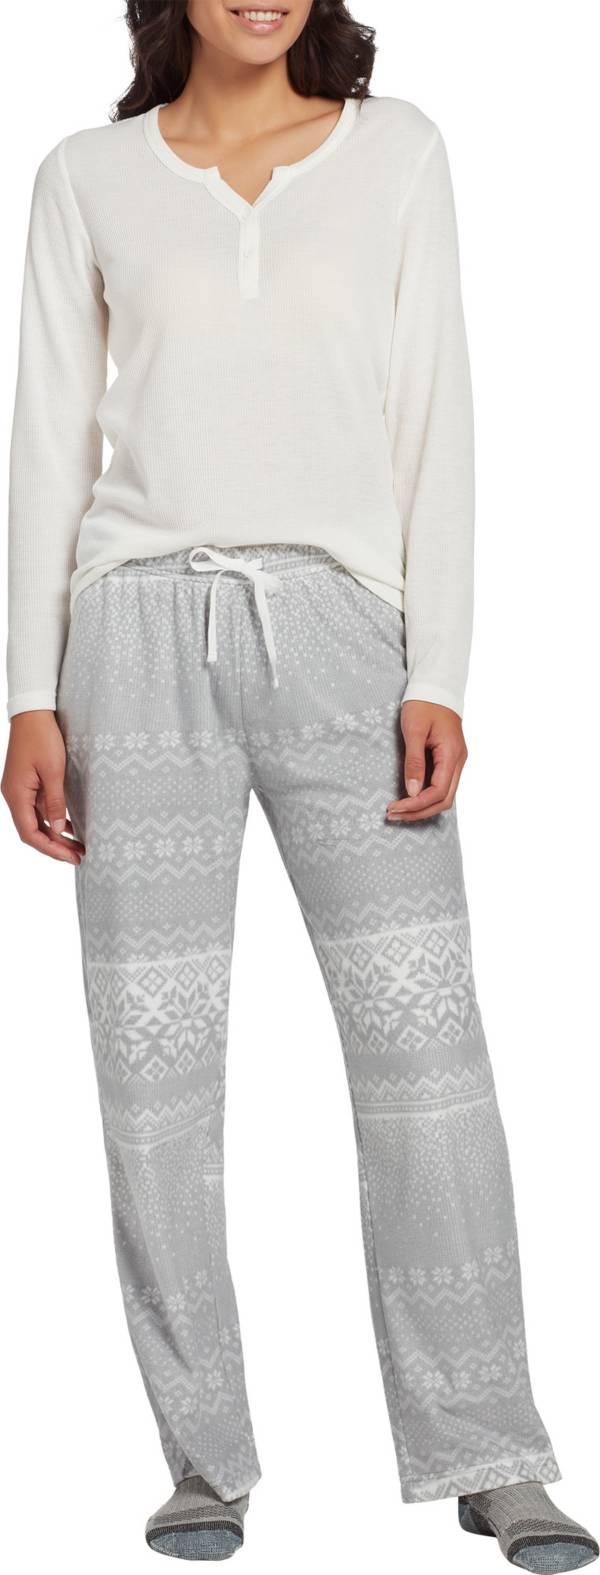 Field & Stream Women's Cozy 2-Piece Pajama Set product image